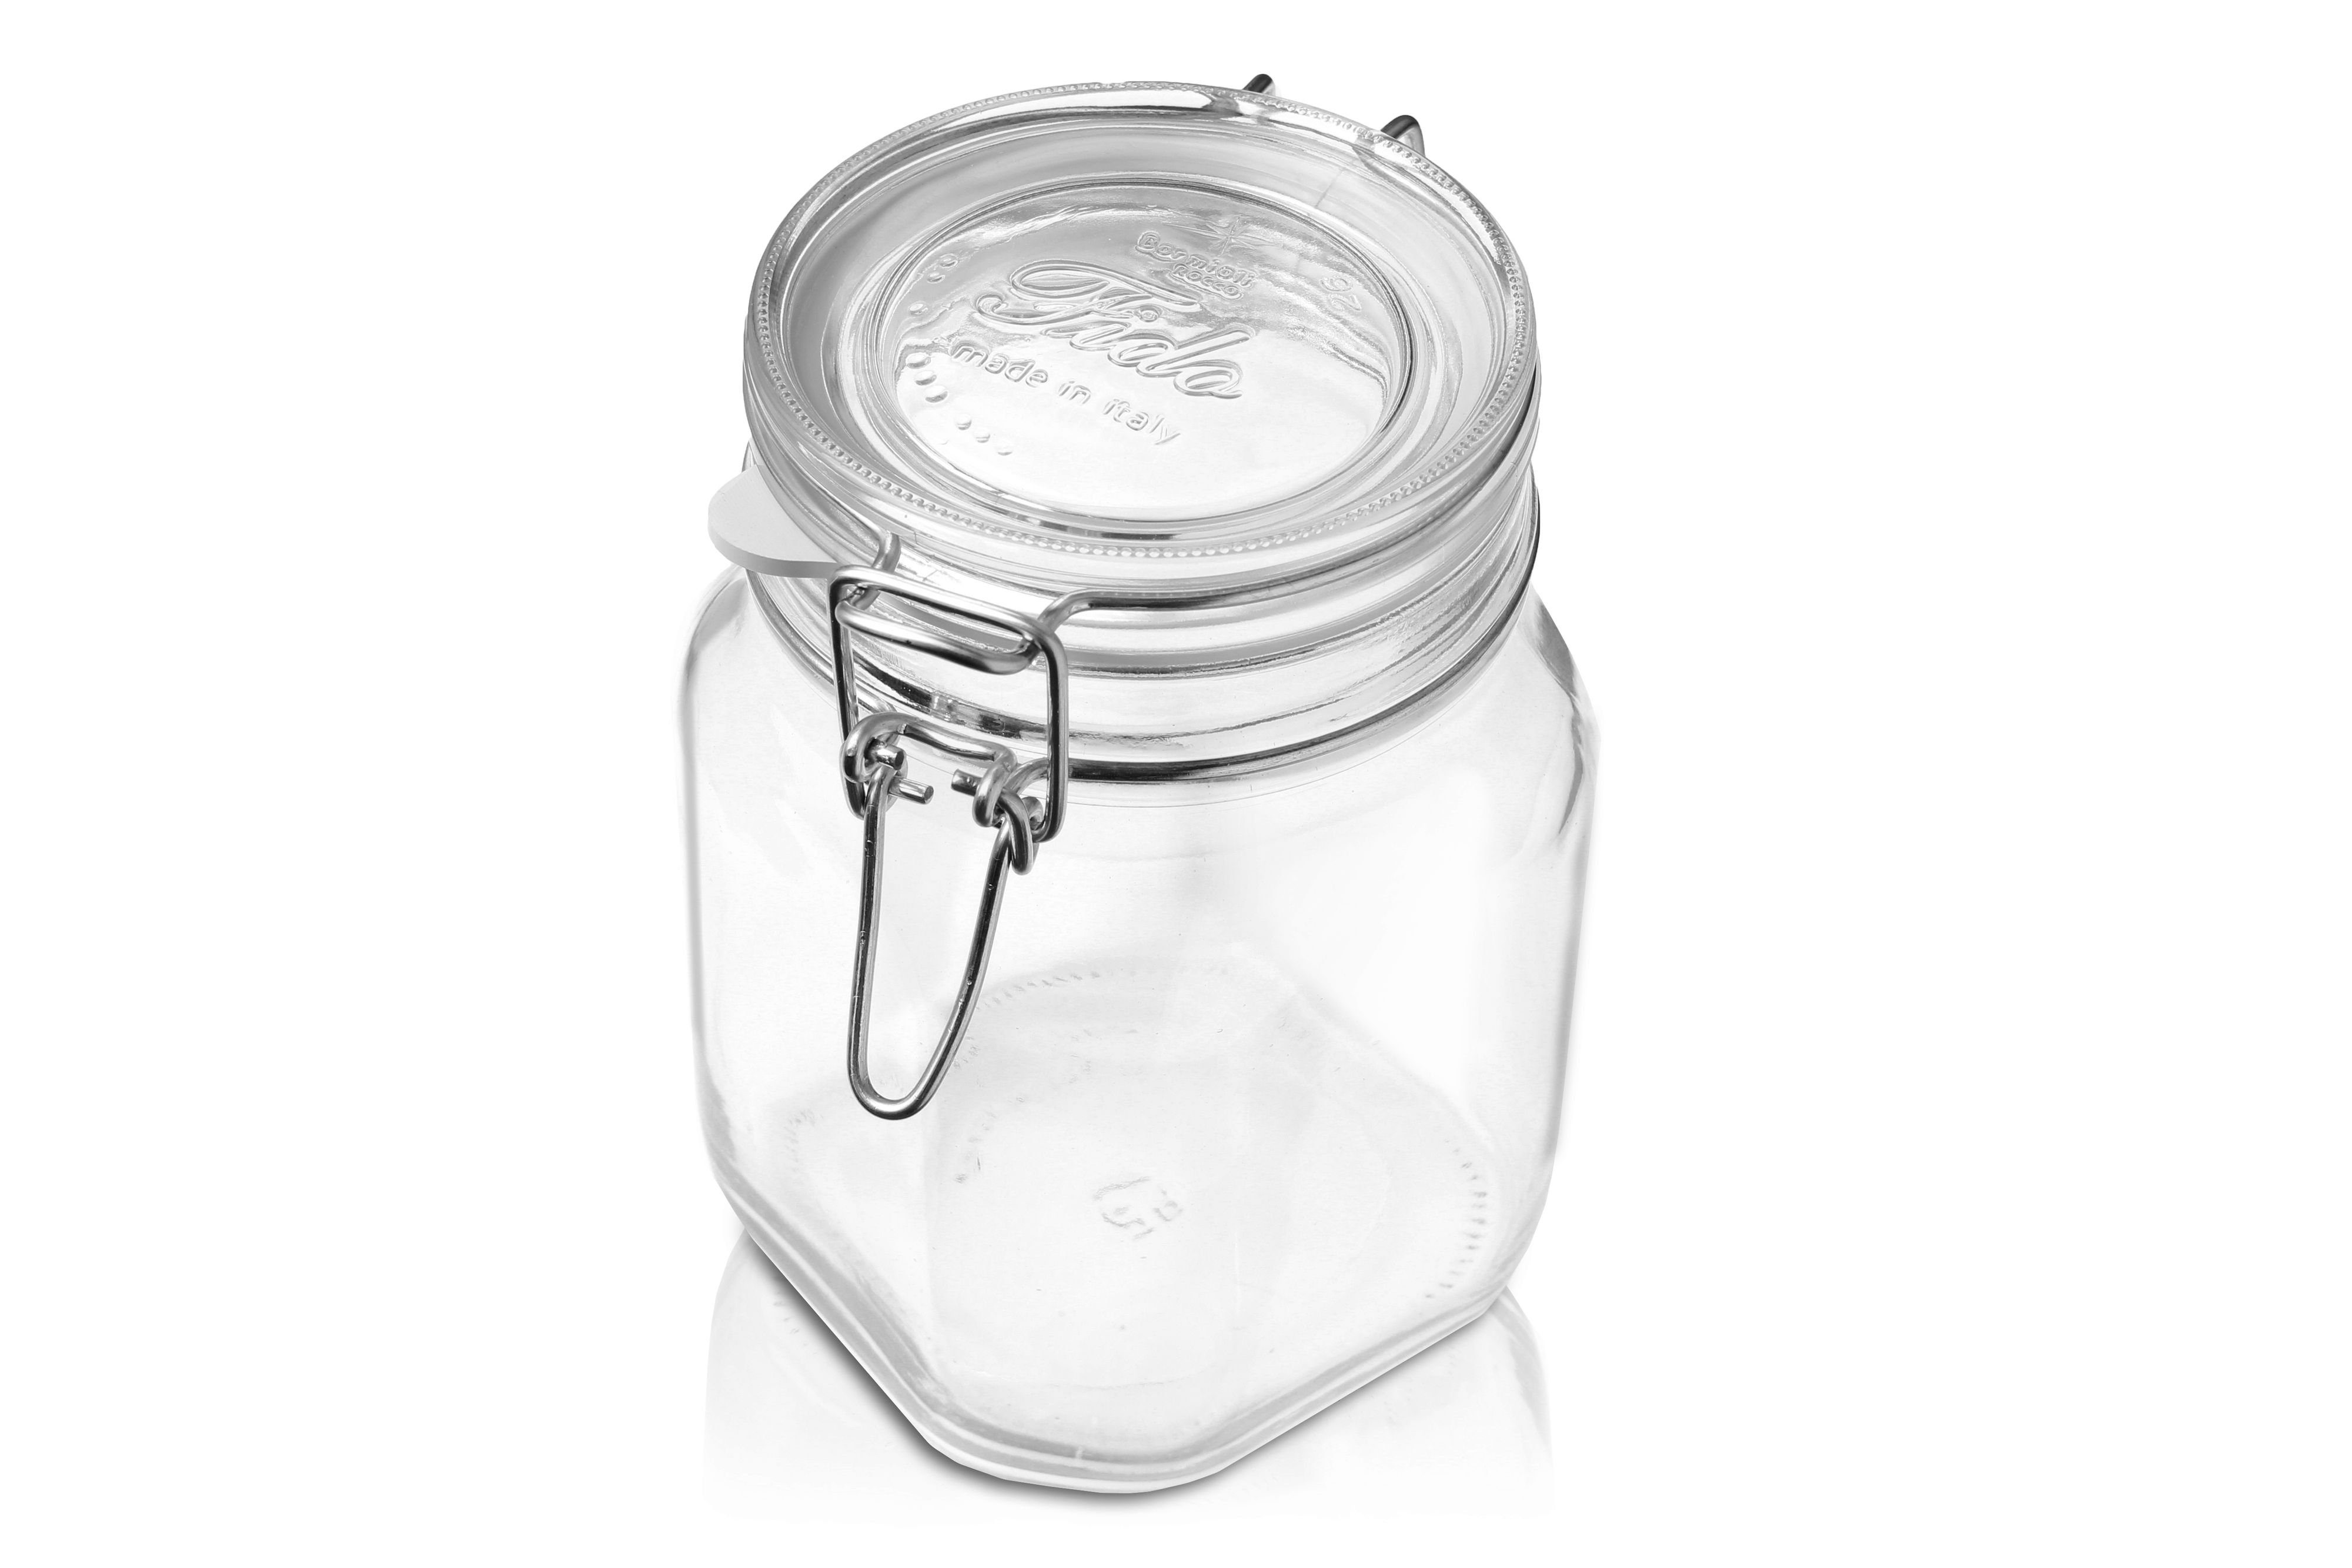 MamboCat Vorratsglas 6er Set Rezeptheft, Einmachglas Original 1,0L Glas Bügelverschluss incl Fido